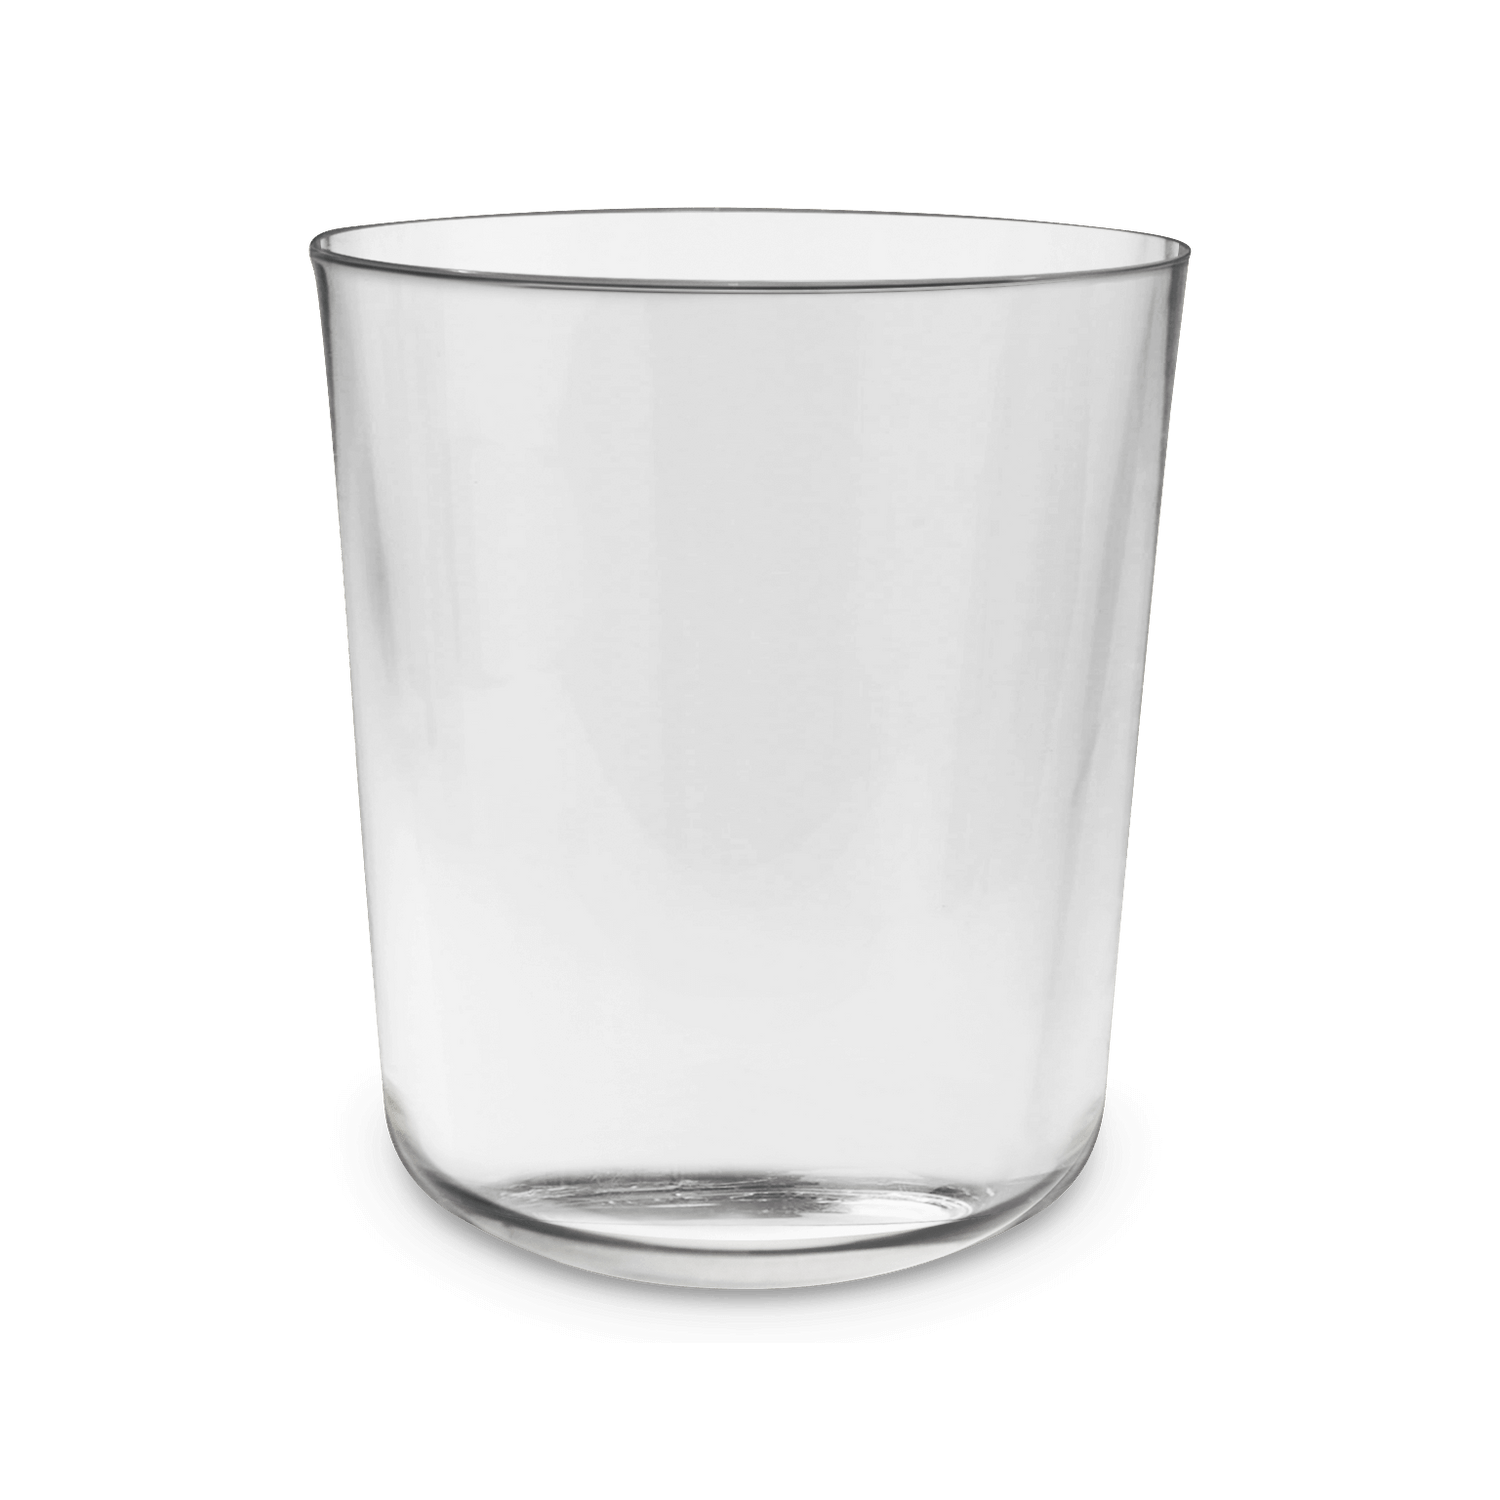 Match Pewter Glass Cookie Jar